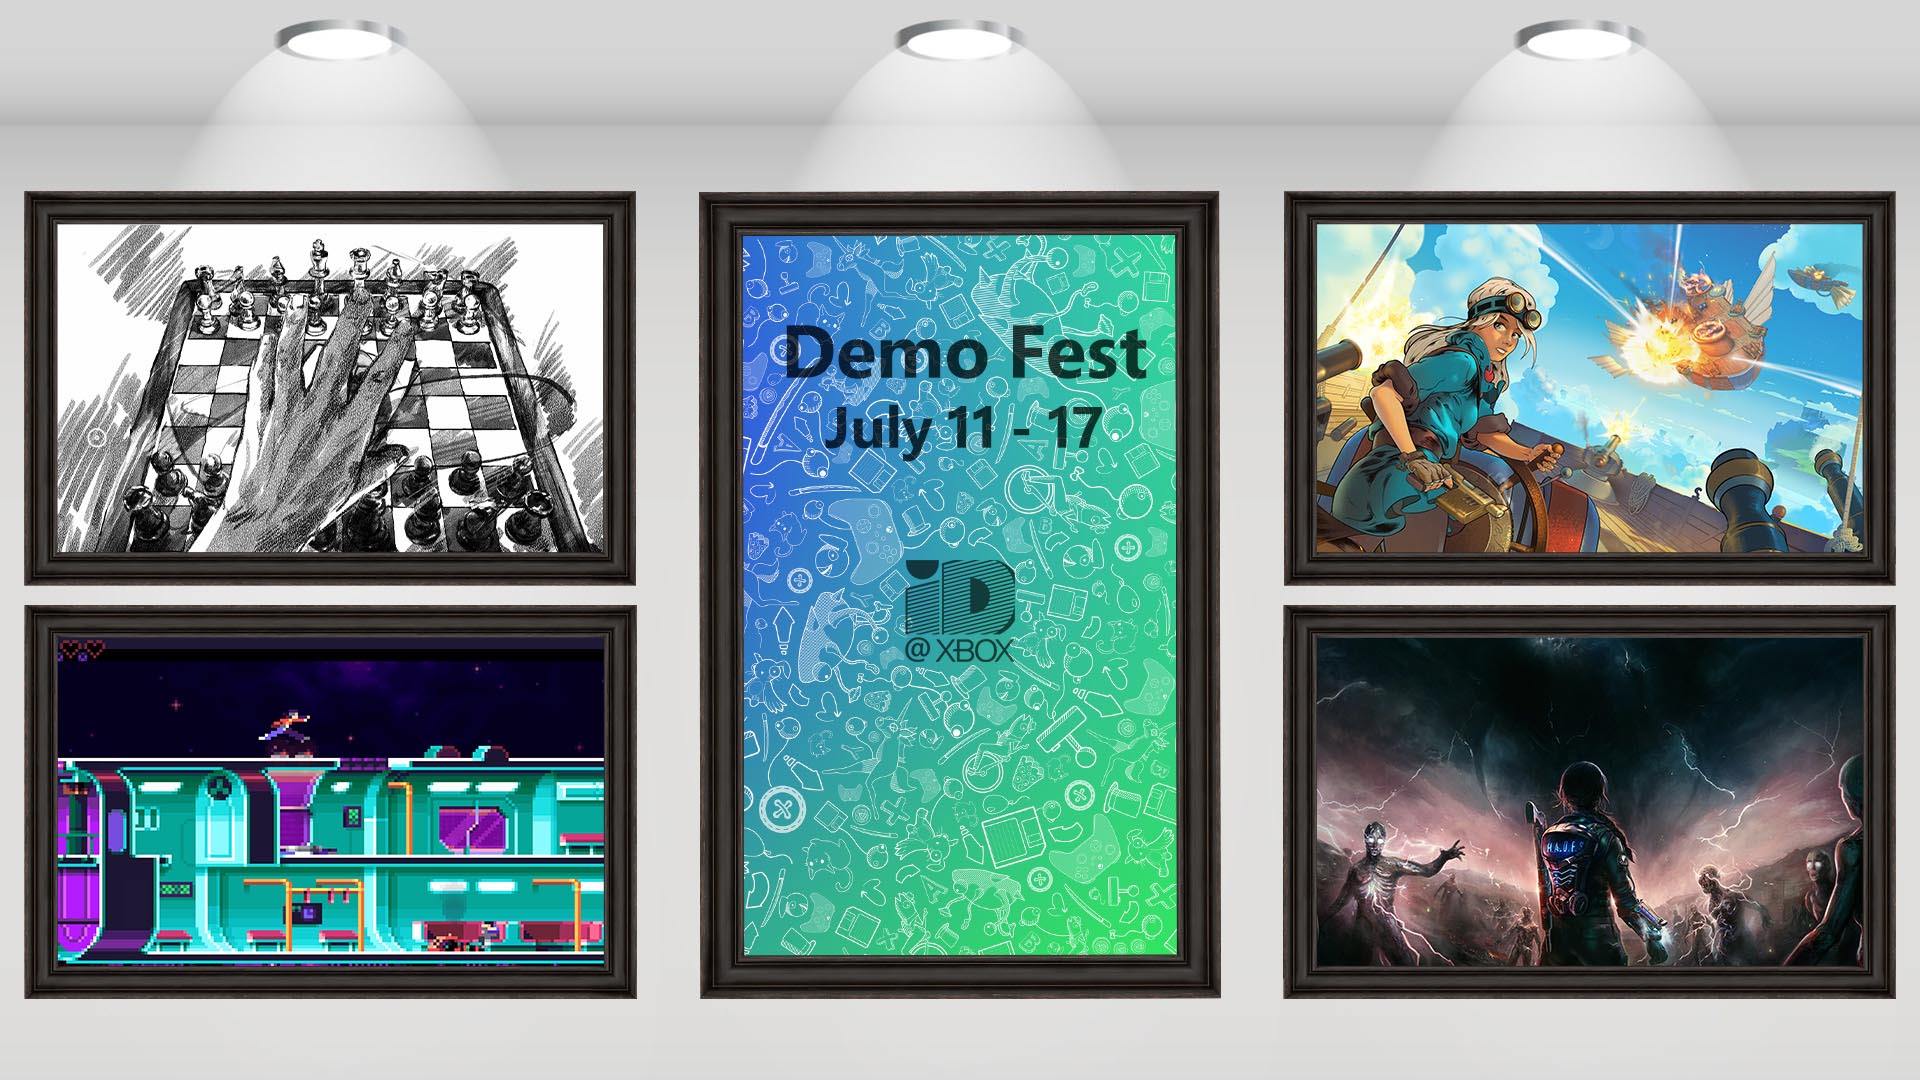 ID@Xbox Demo Fest Showcases 40+ Video games